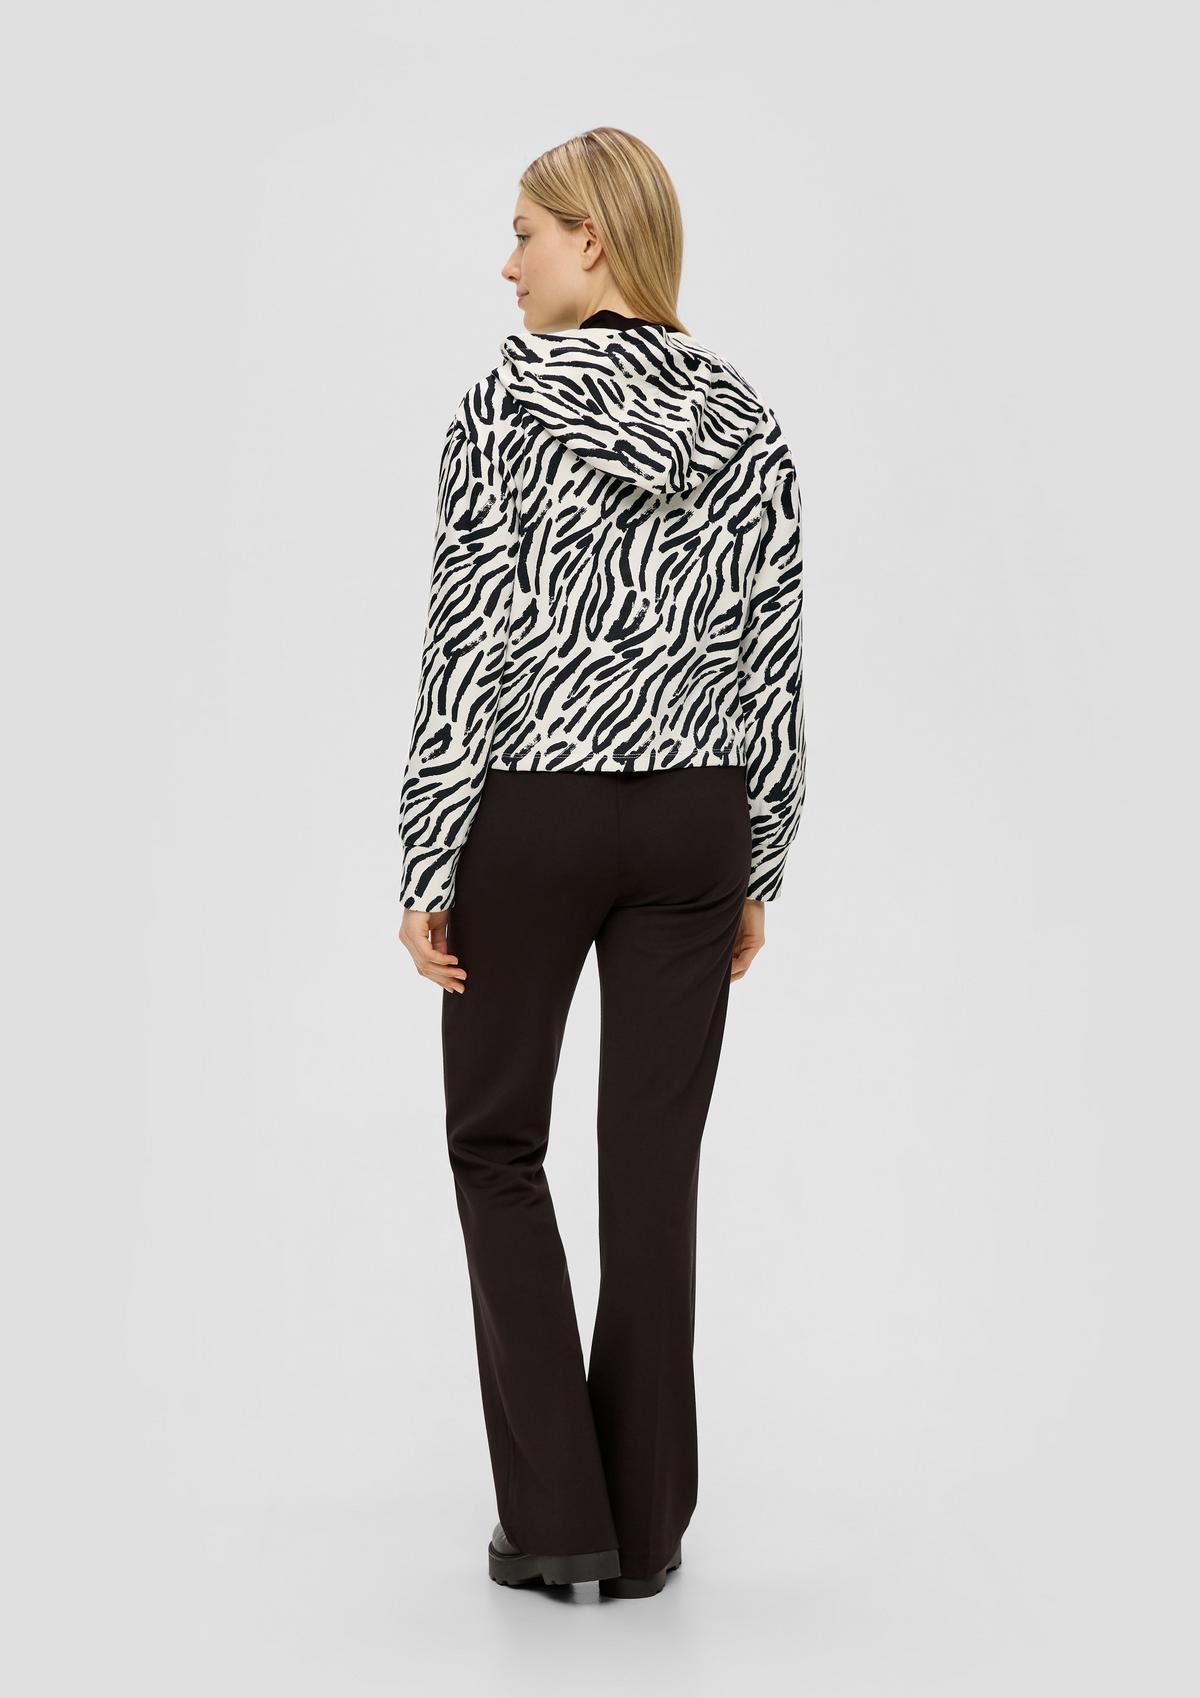 s.Oliver Sweatshirt jacket with a zebra pattern